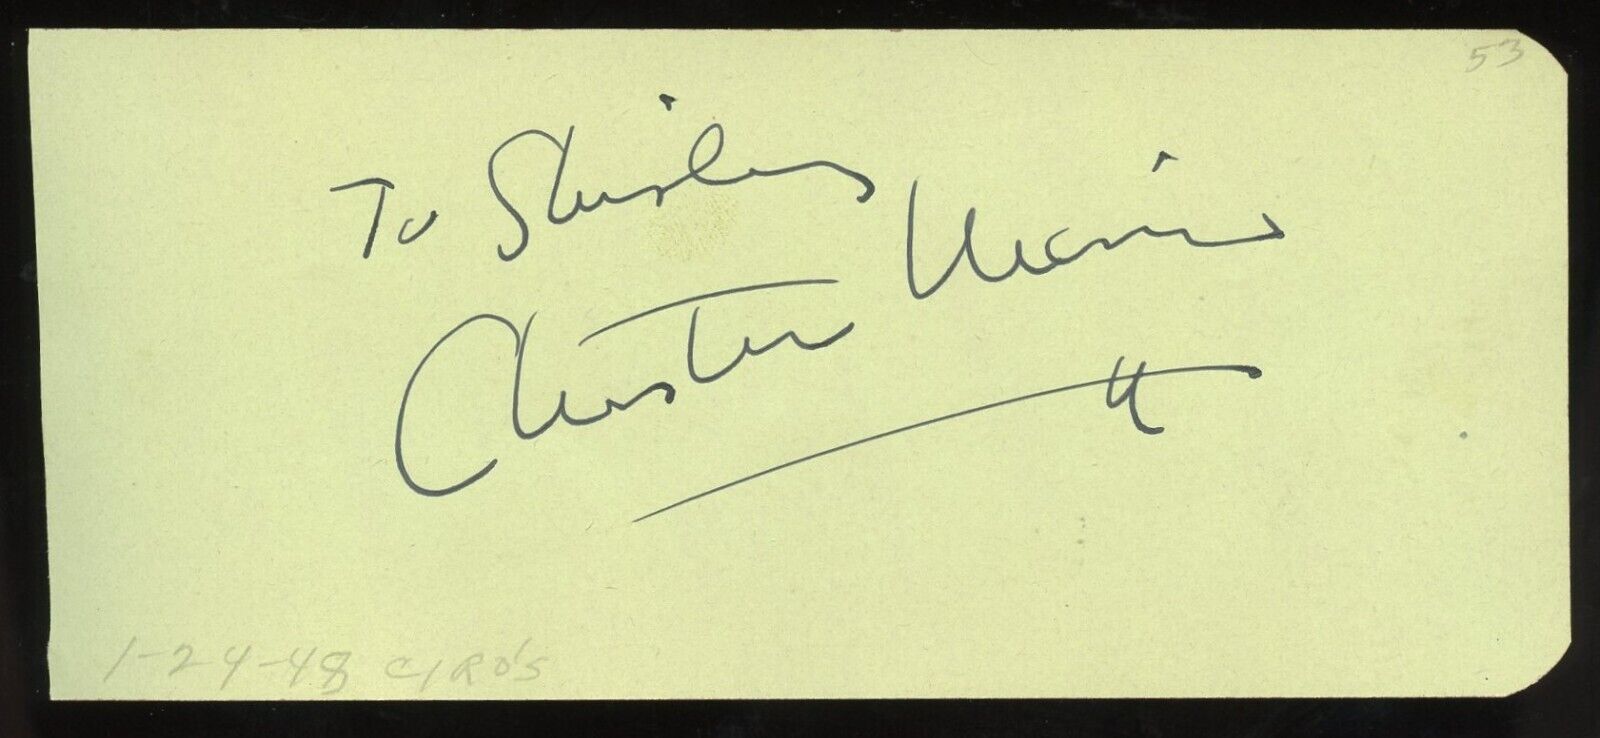 Chester Morris d1970 signed 2x5 cut autograph on 1-24-48 at Ciro's Night Club LA